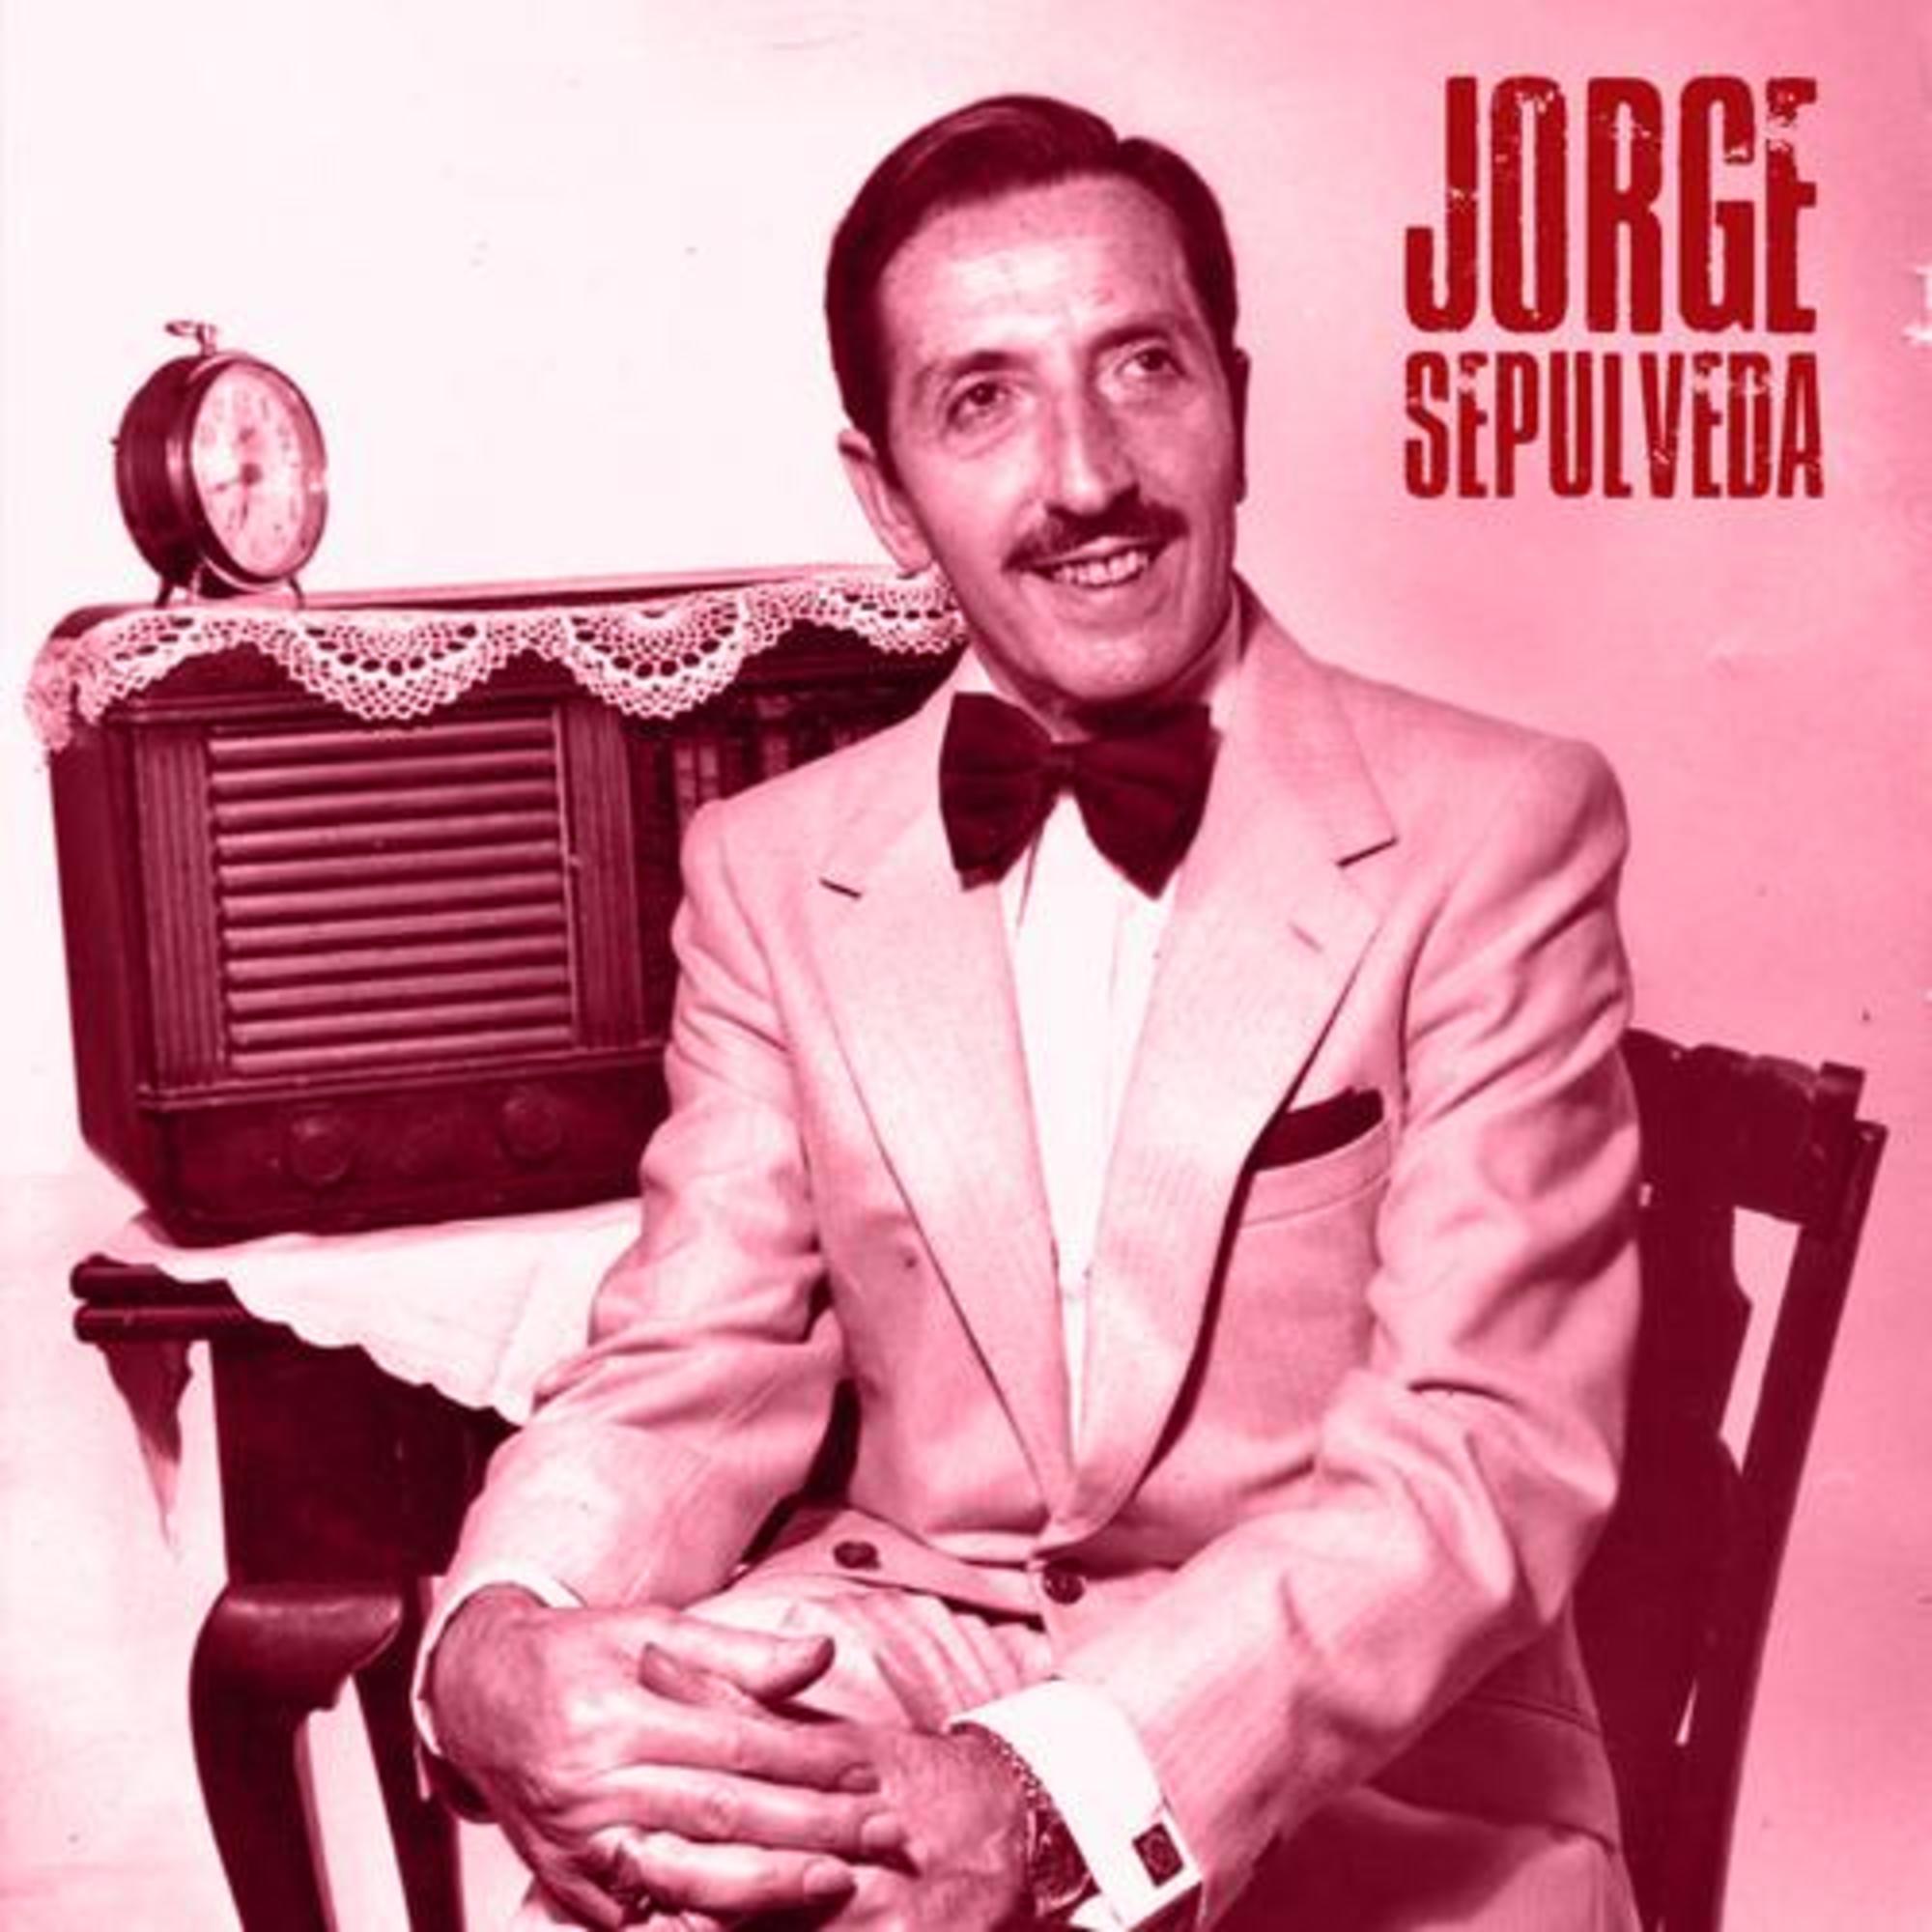 La radio hizo muy popular a Jorge Sepúlveda